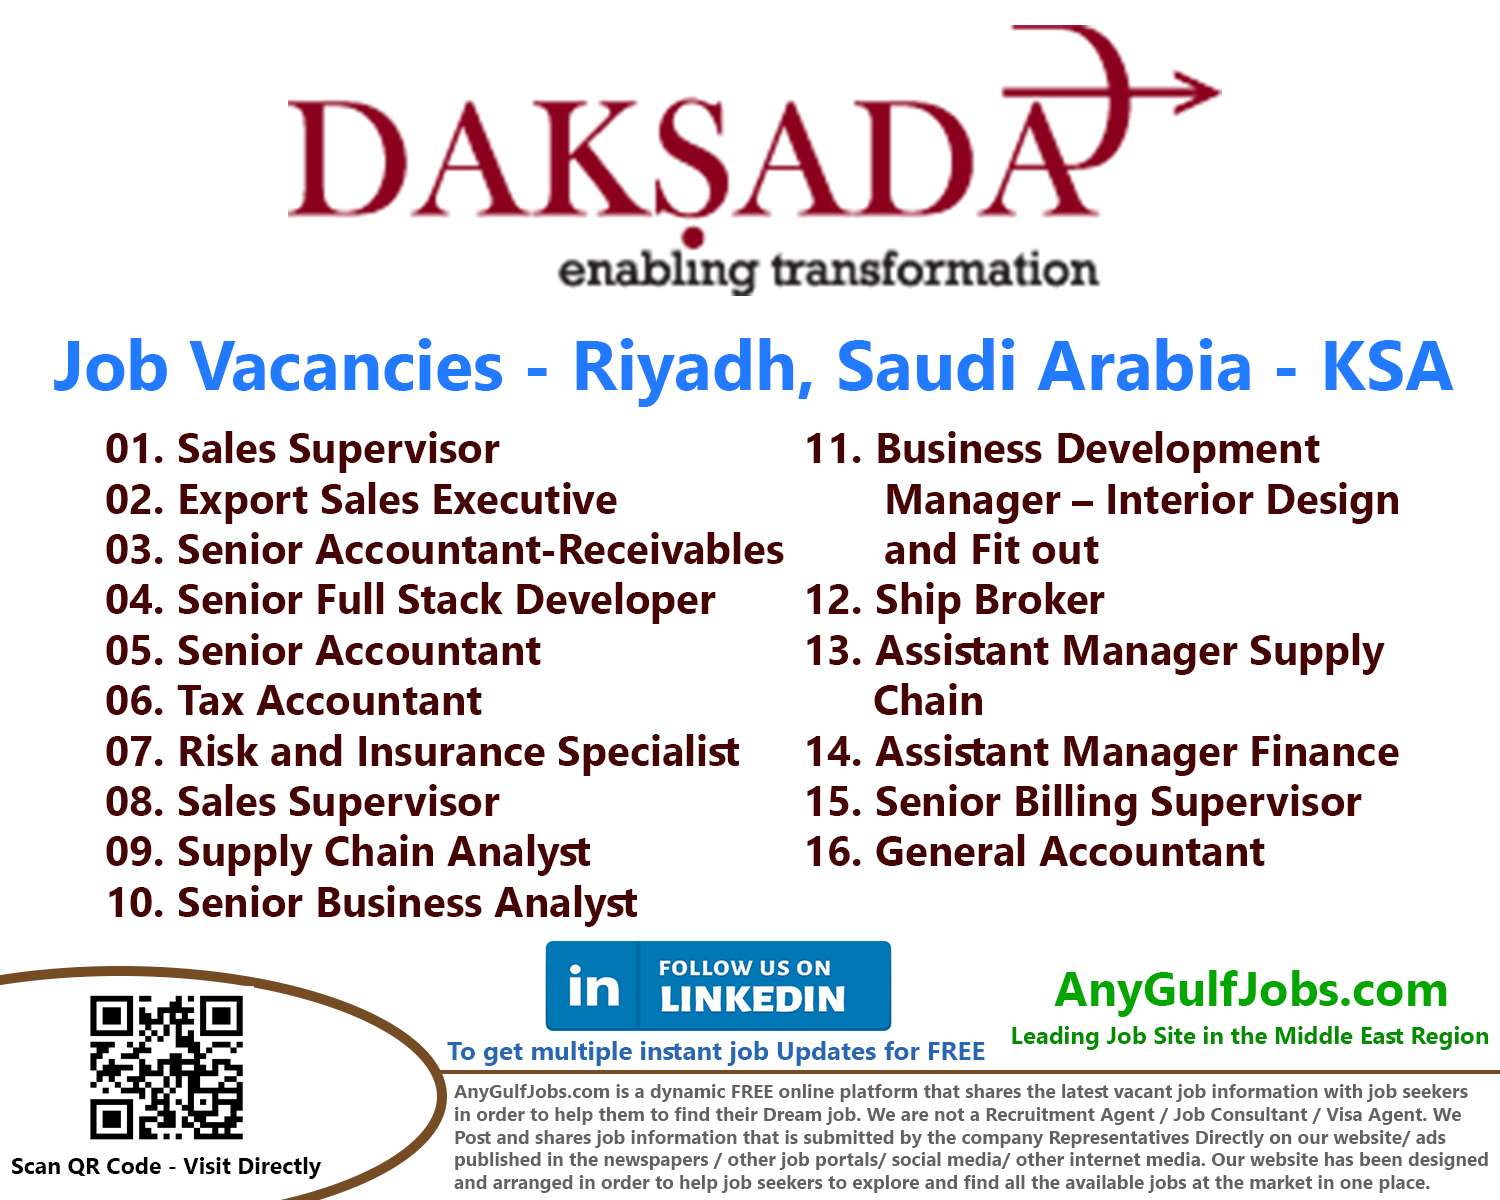 Daksada Job Vacancies - Riyadh, Saudi Arabia - KSA